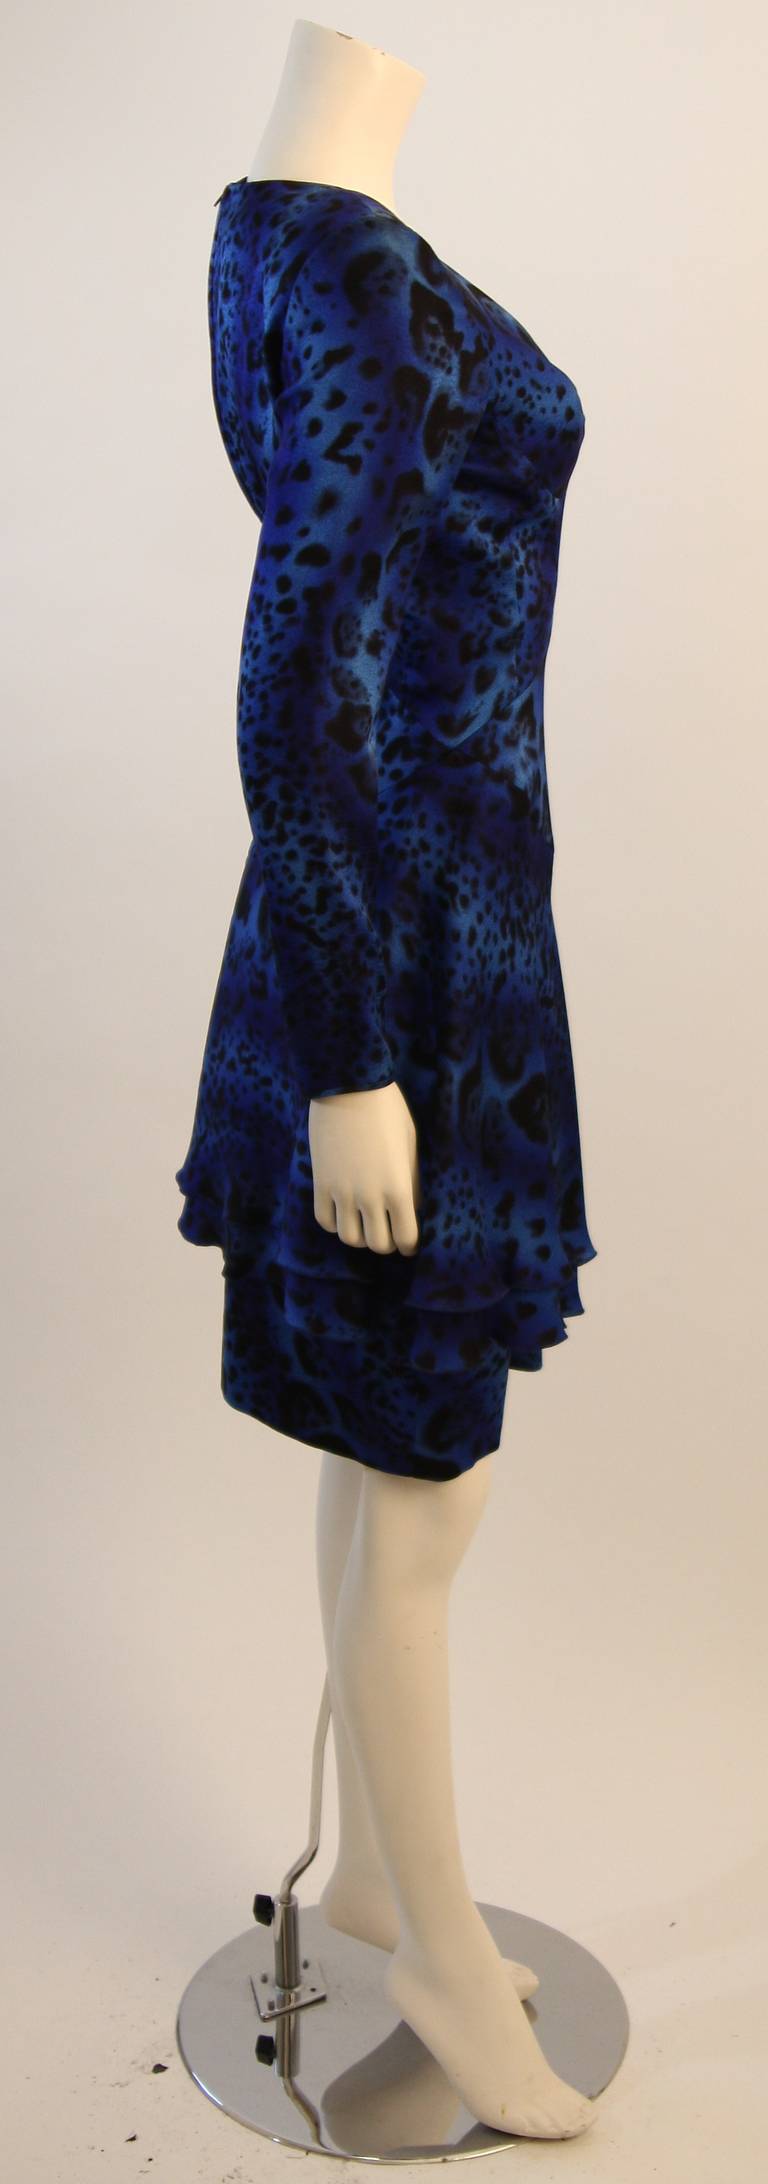 Emanuel Ungaro Rich Blue Abstract Animal Print Dress Size 8 2